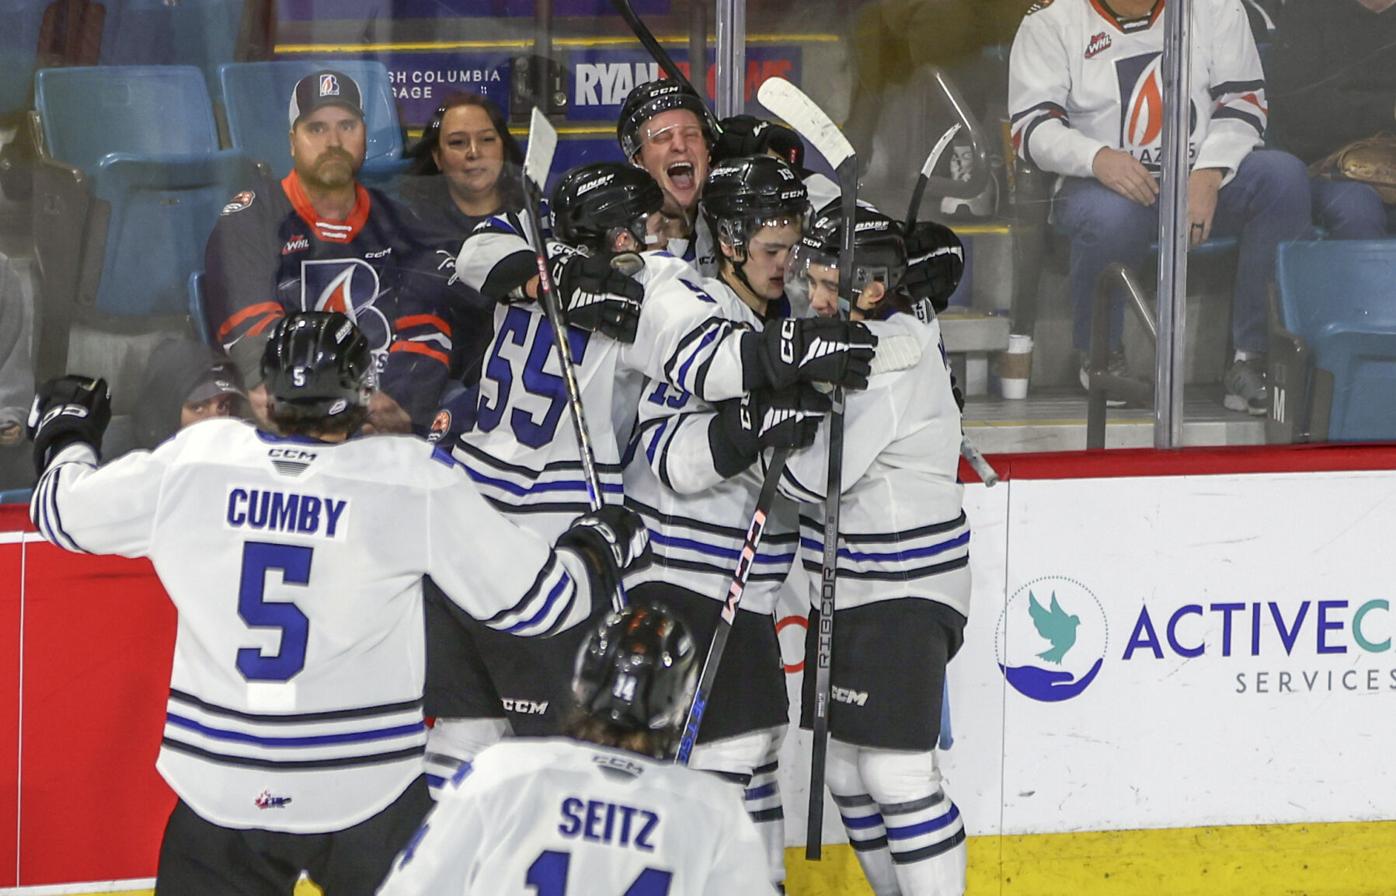 North Dakota's surge continues in new men's hockey Power 5